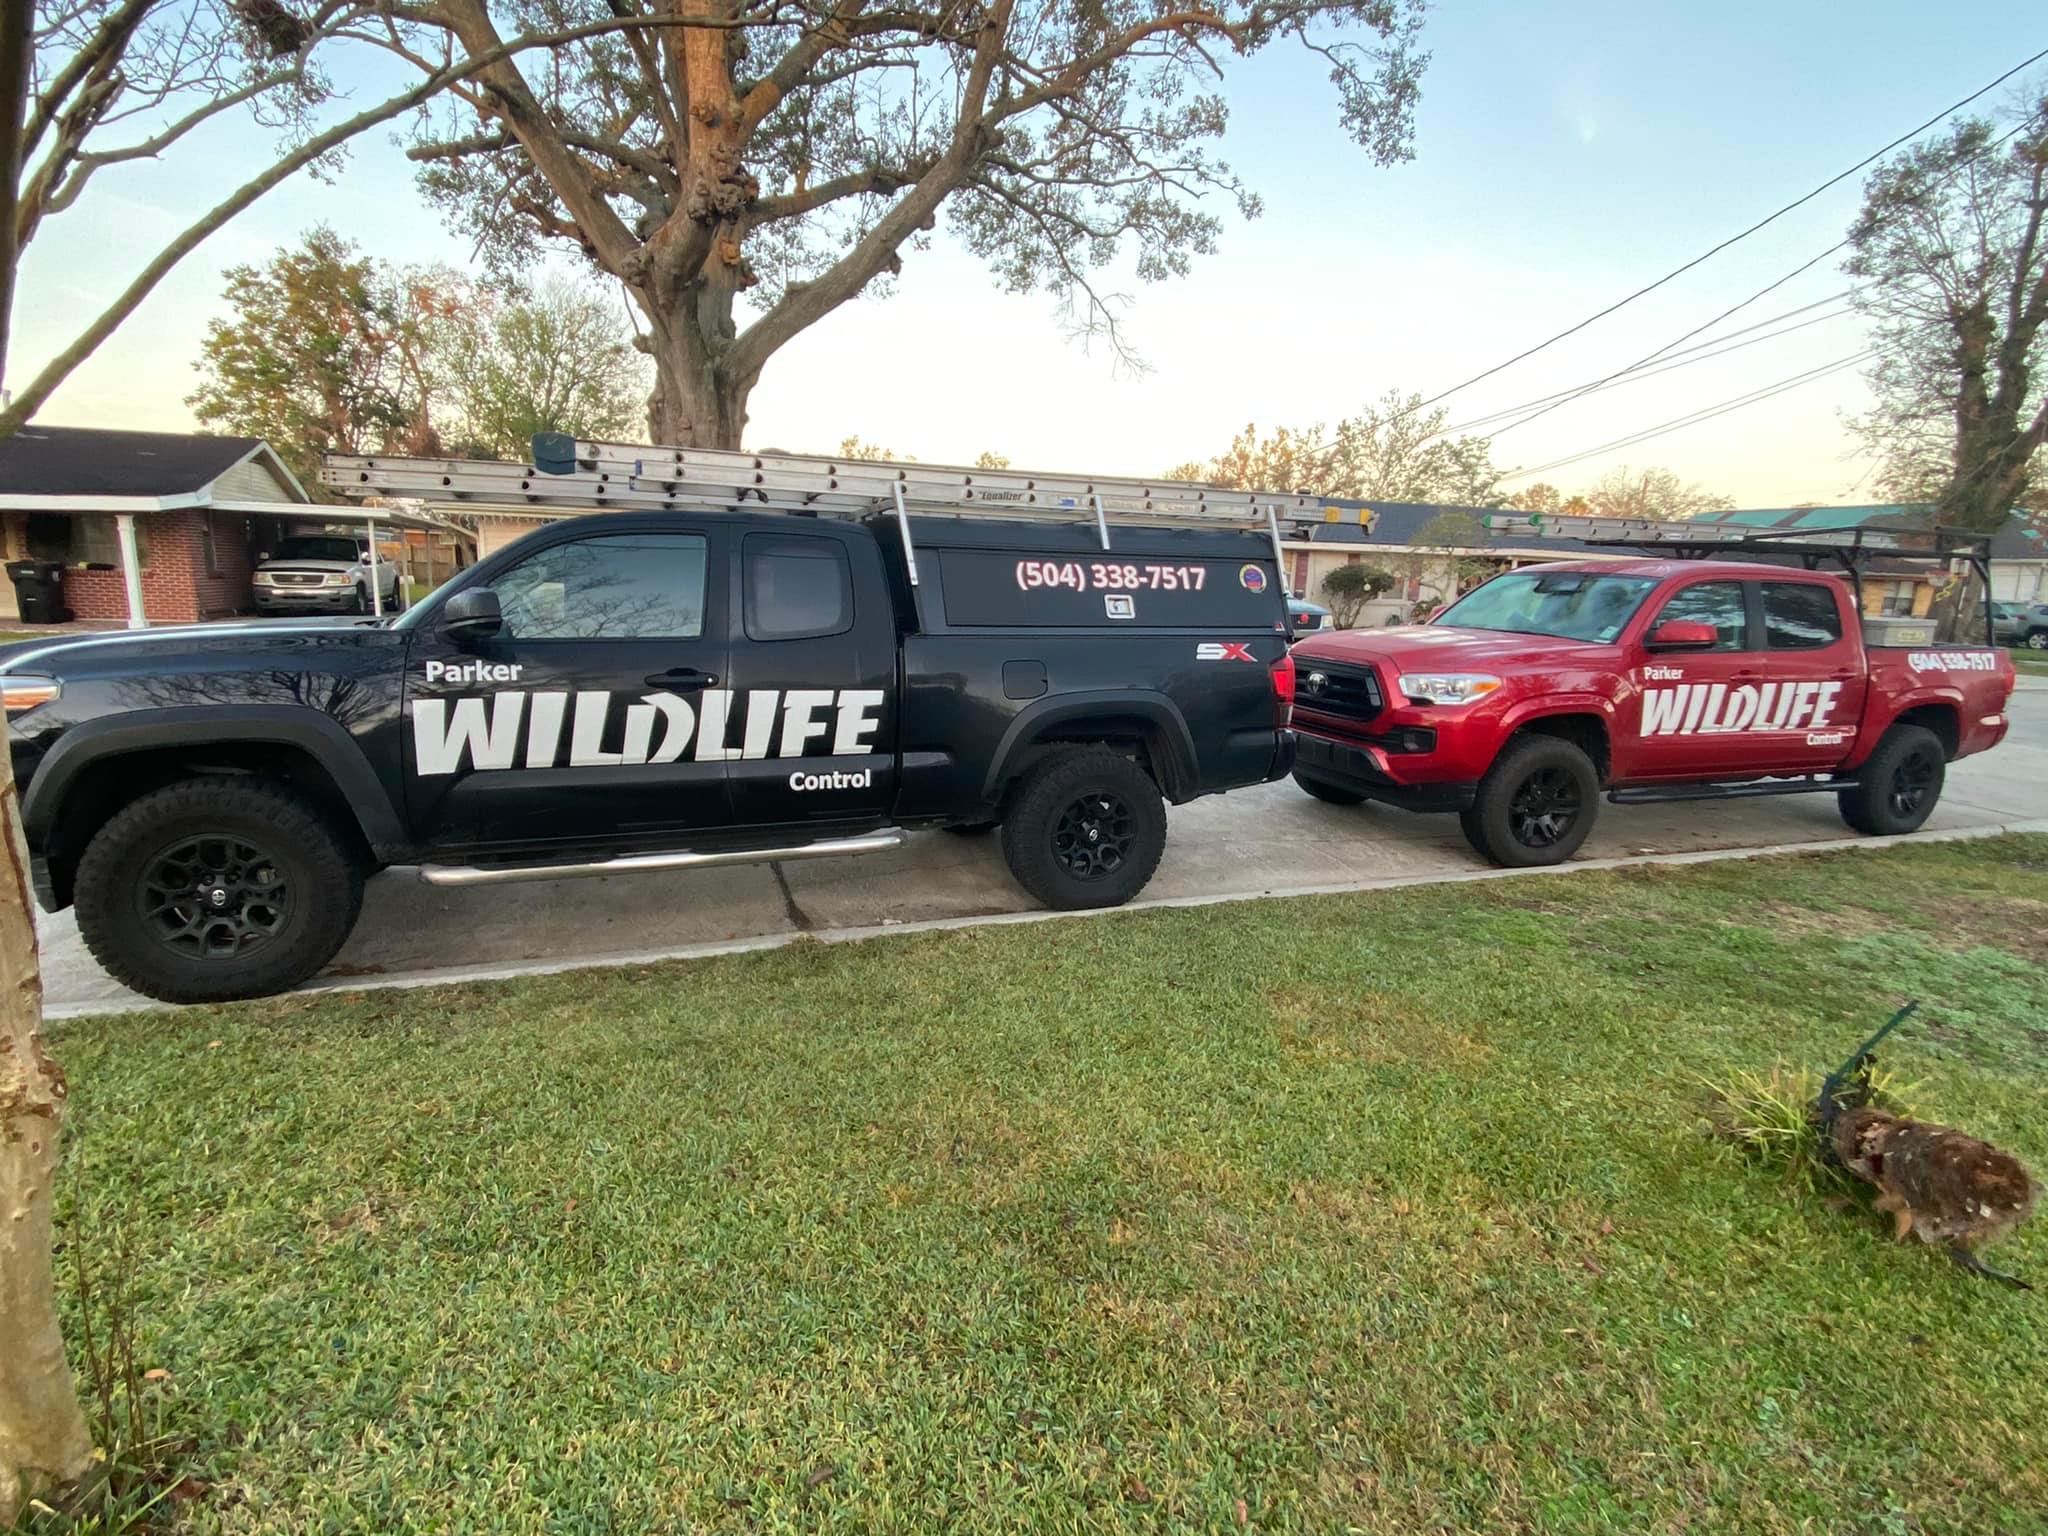 Parker Wildlife Control Trucks